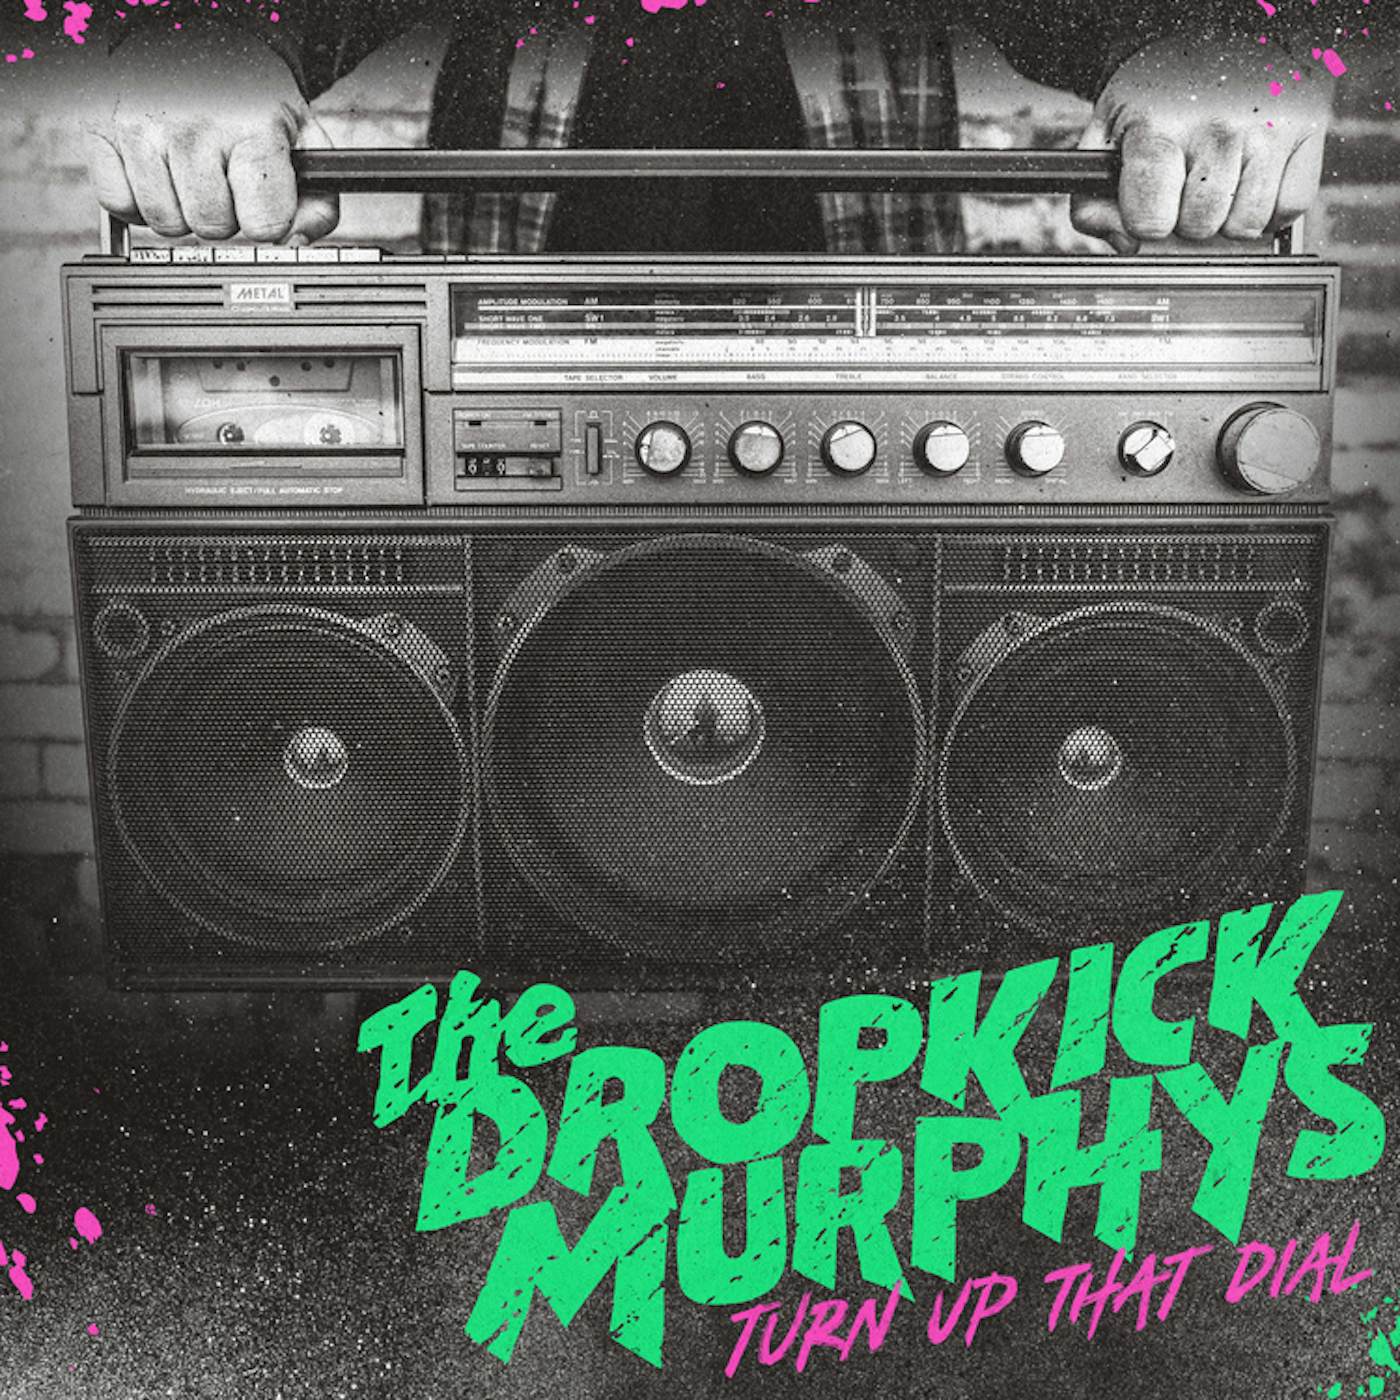 Dropkick Murphys TURN UP THAT DIAL Vinyl Record